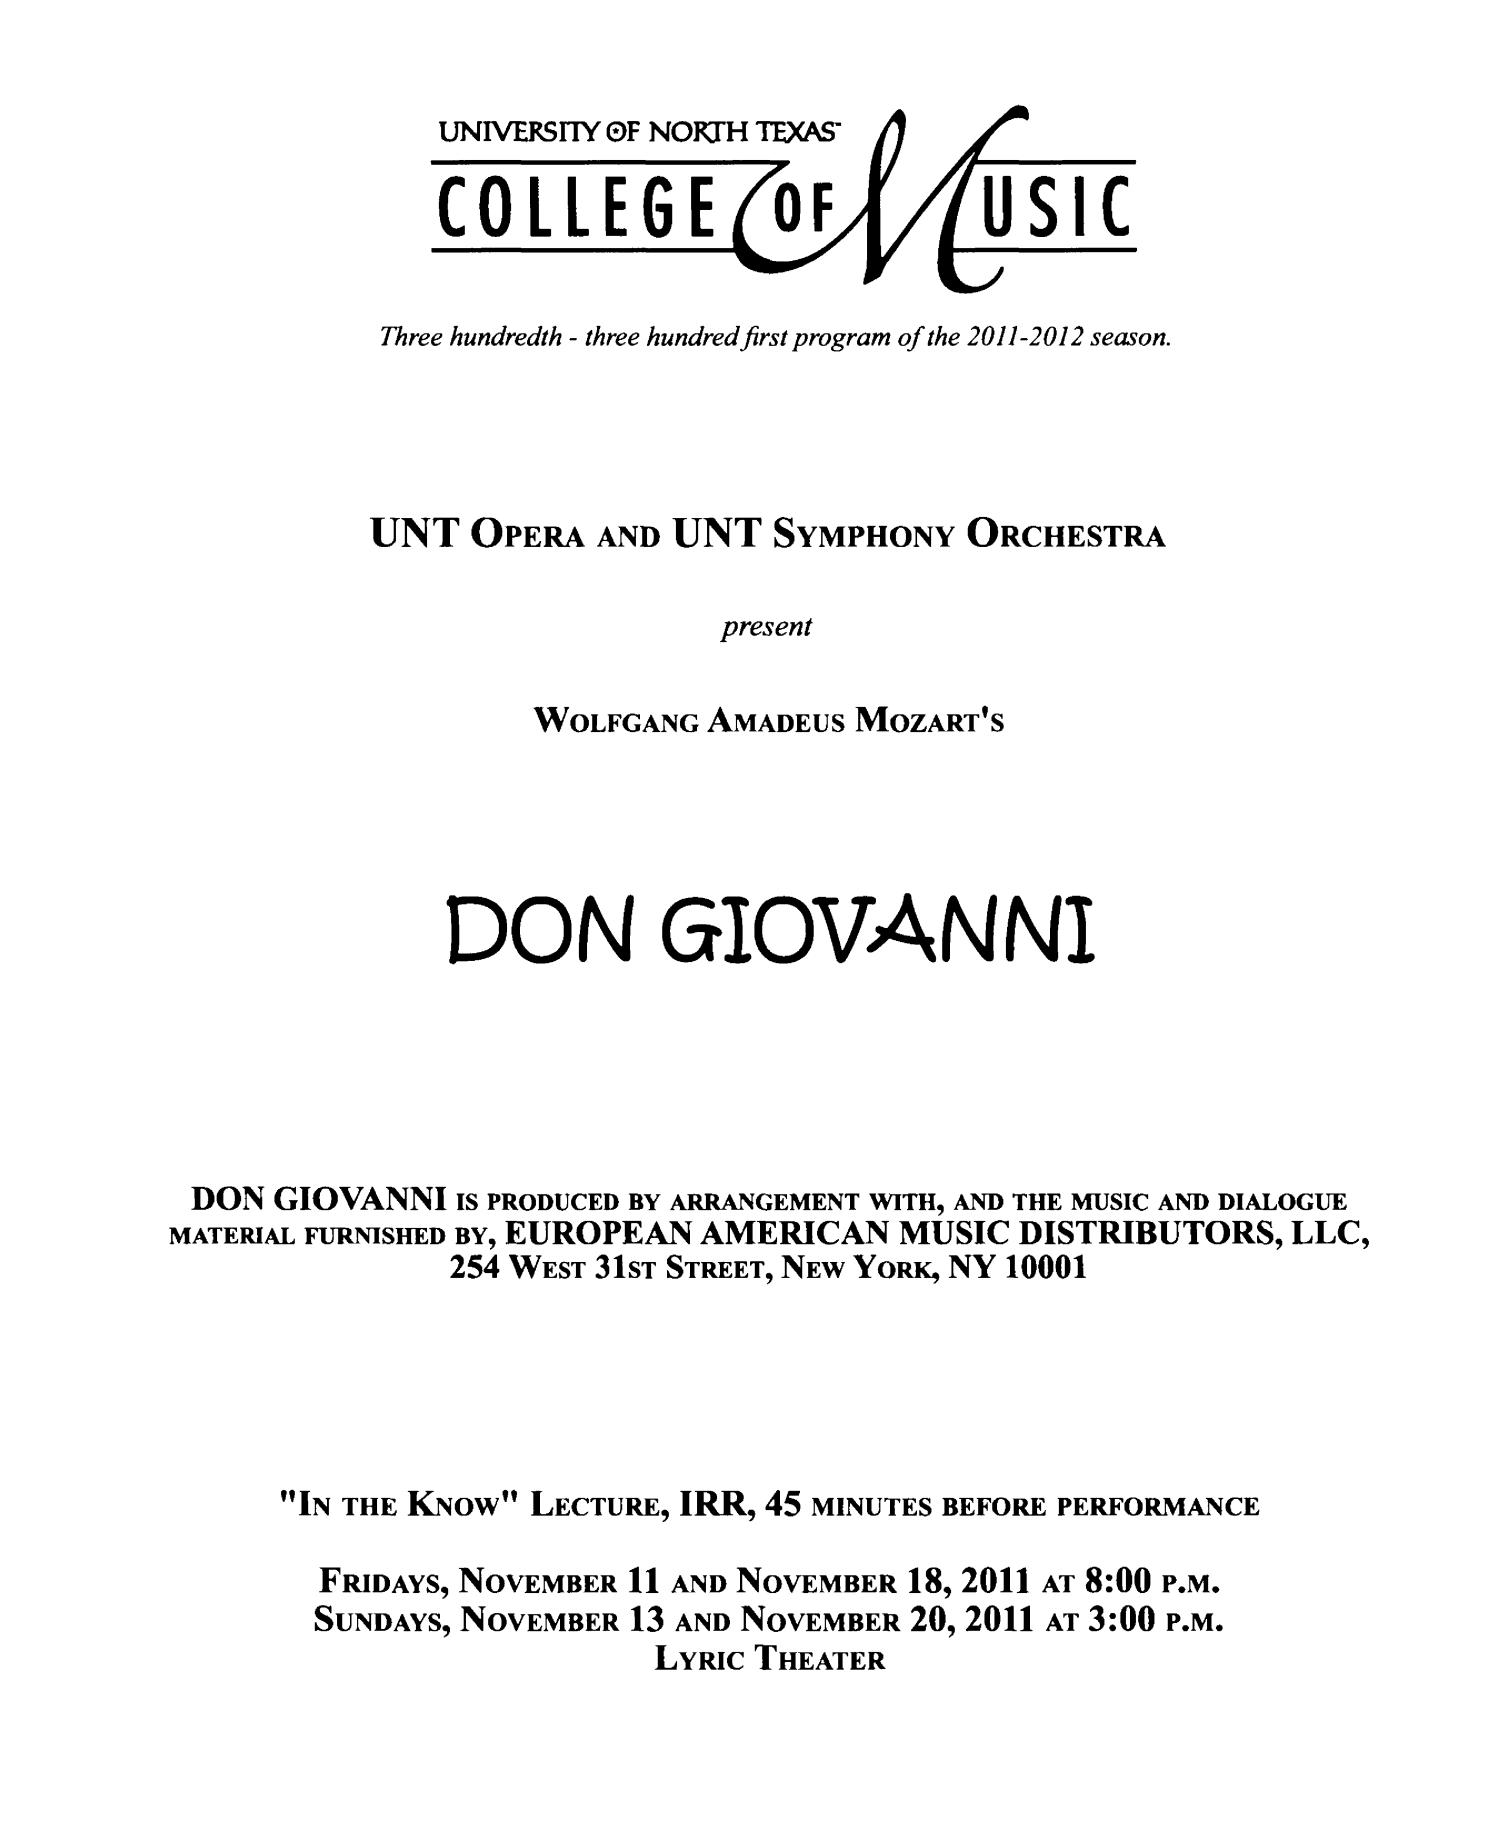 College of Music Program Book 2011-2012: Ensemble & Other Performances, Volume 1
                                                
                                                    487
                                                